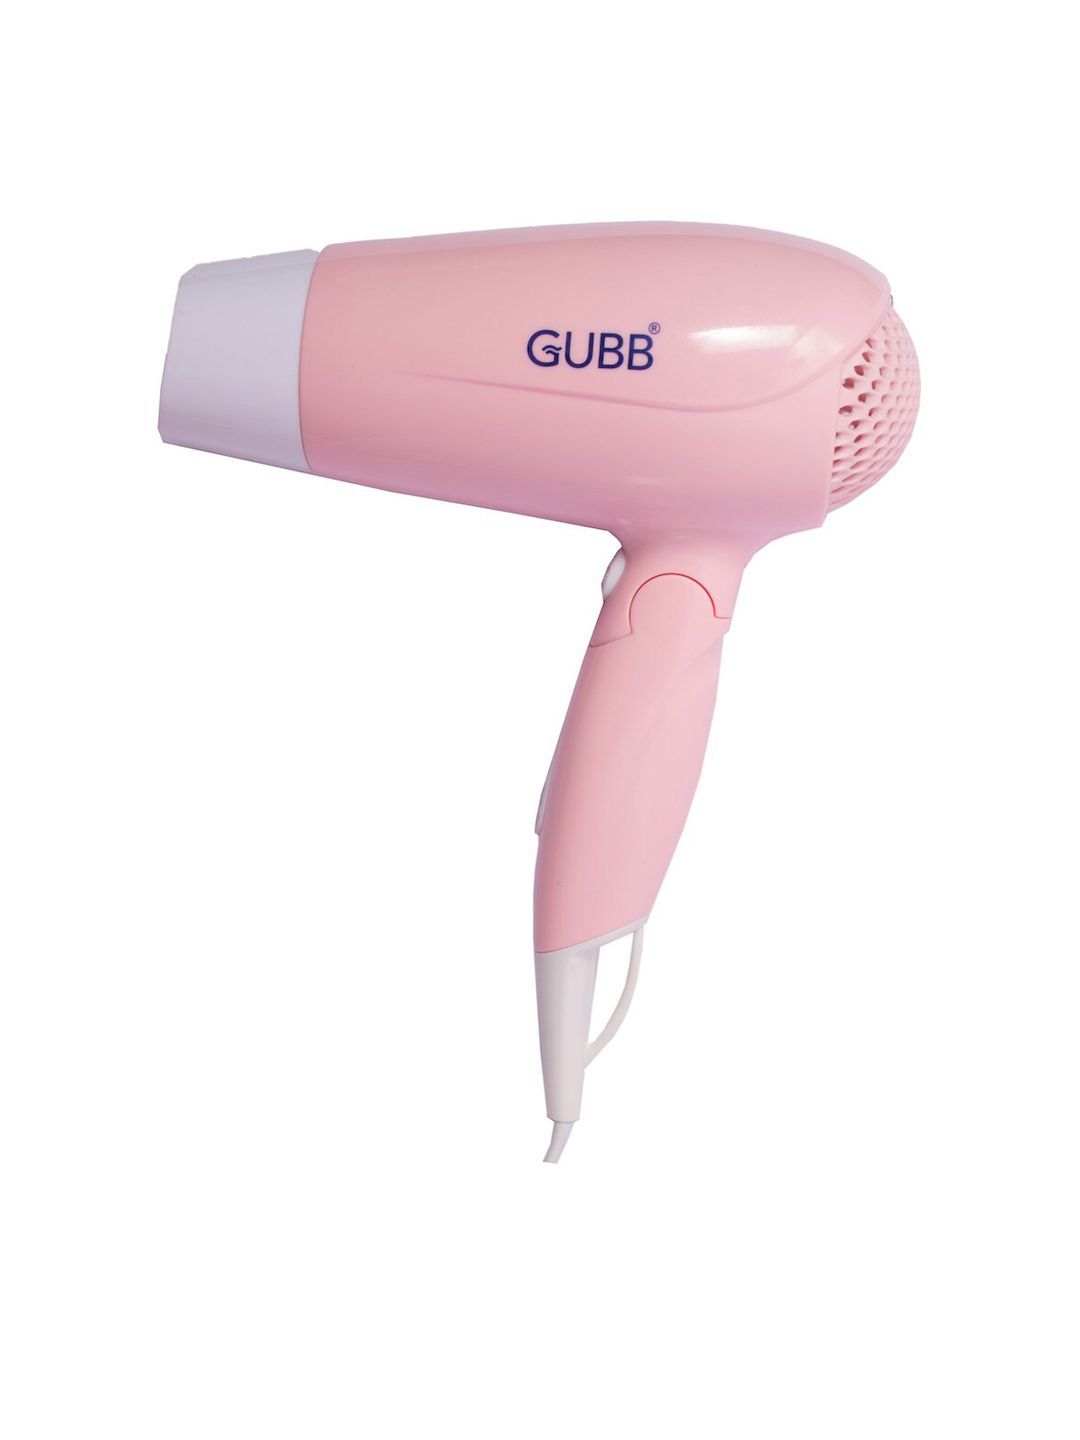 GUBB Pink GB-163 1600W Hair Dryer Price in India